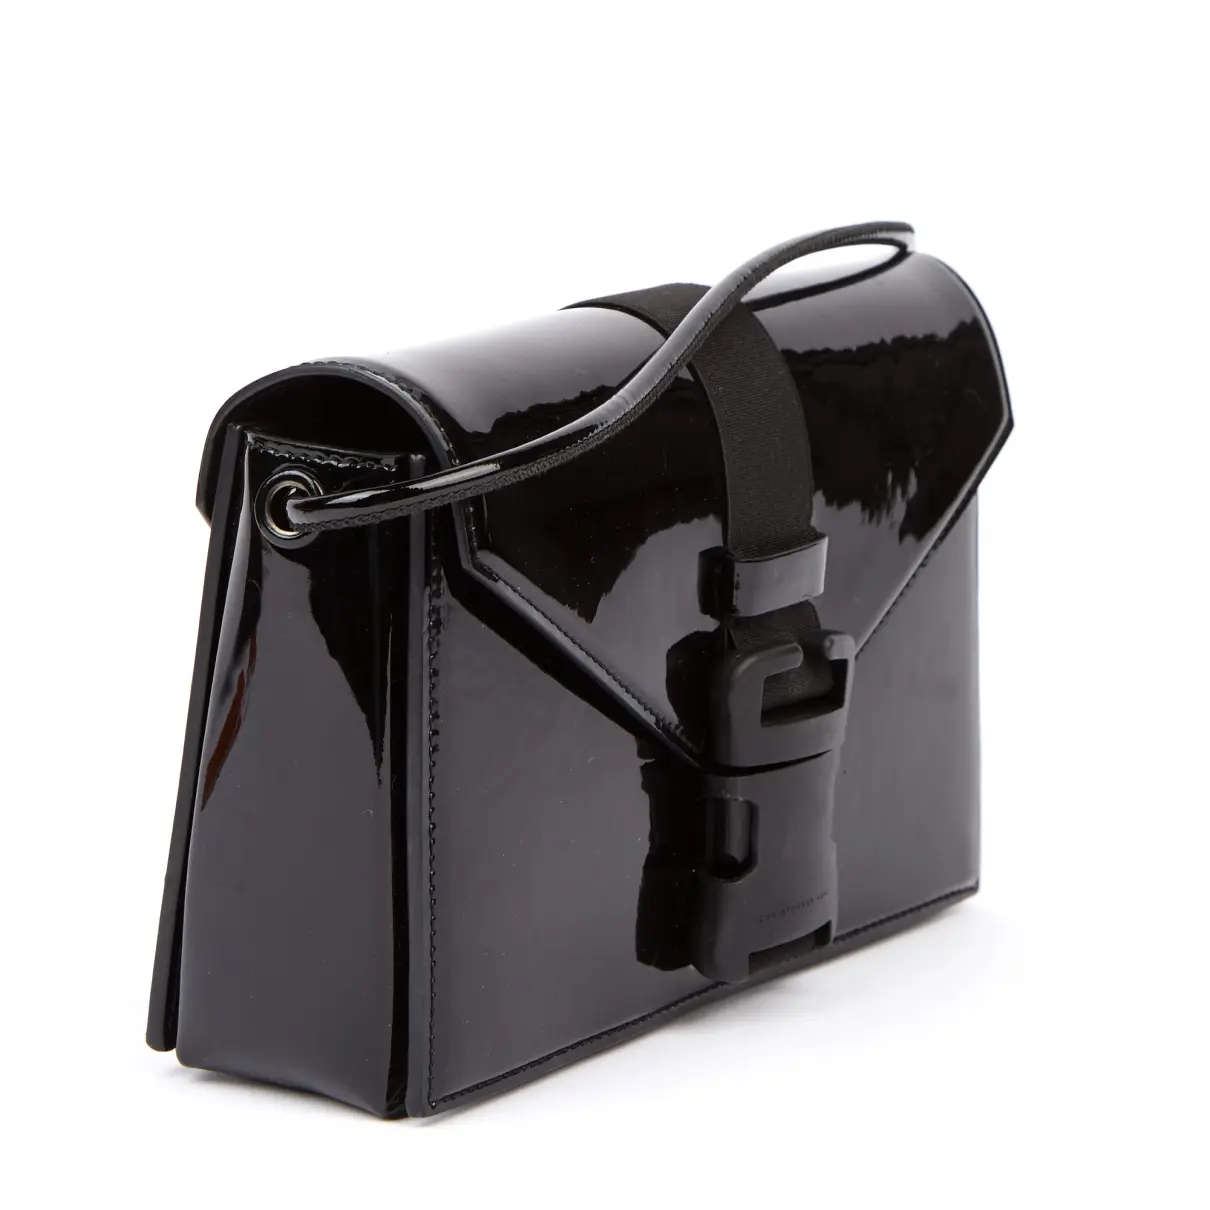 Christopher Kane Patent leather handbag for sale